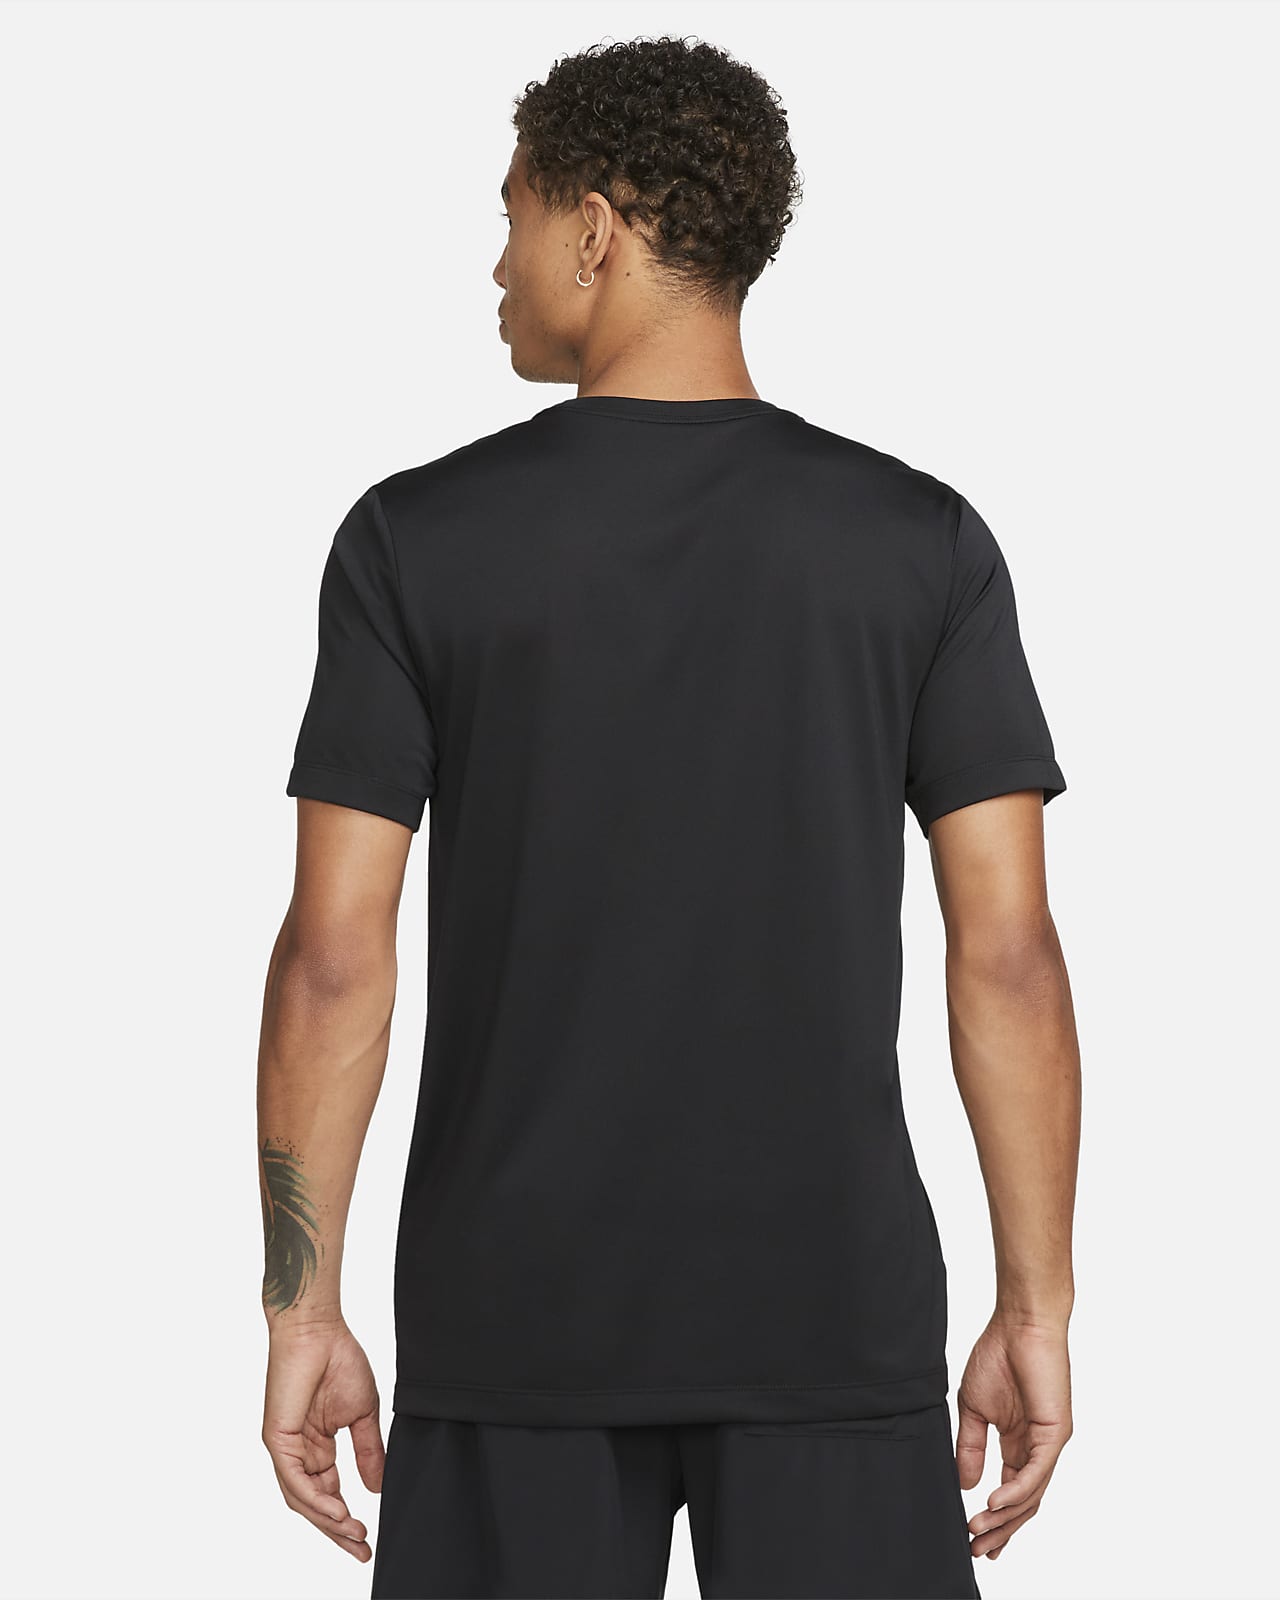 Canada Legend Men's Nike Dri-FIT T-Shirt.